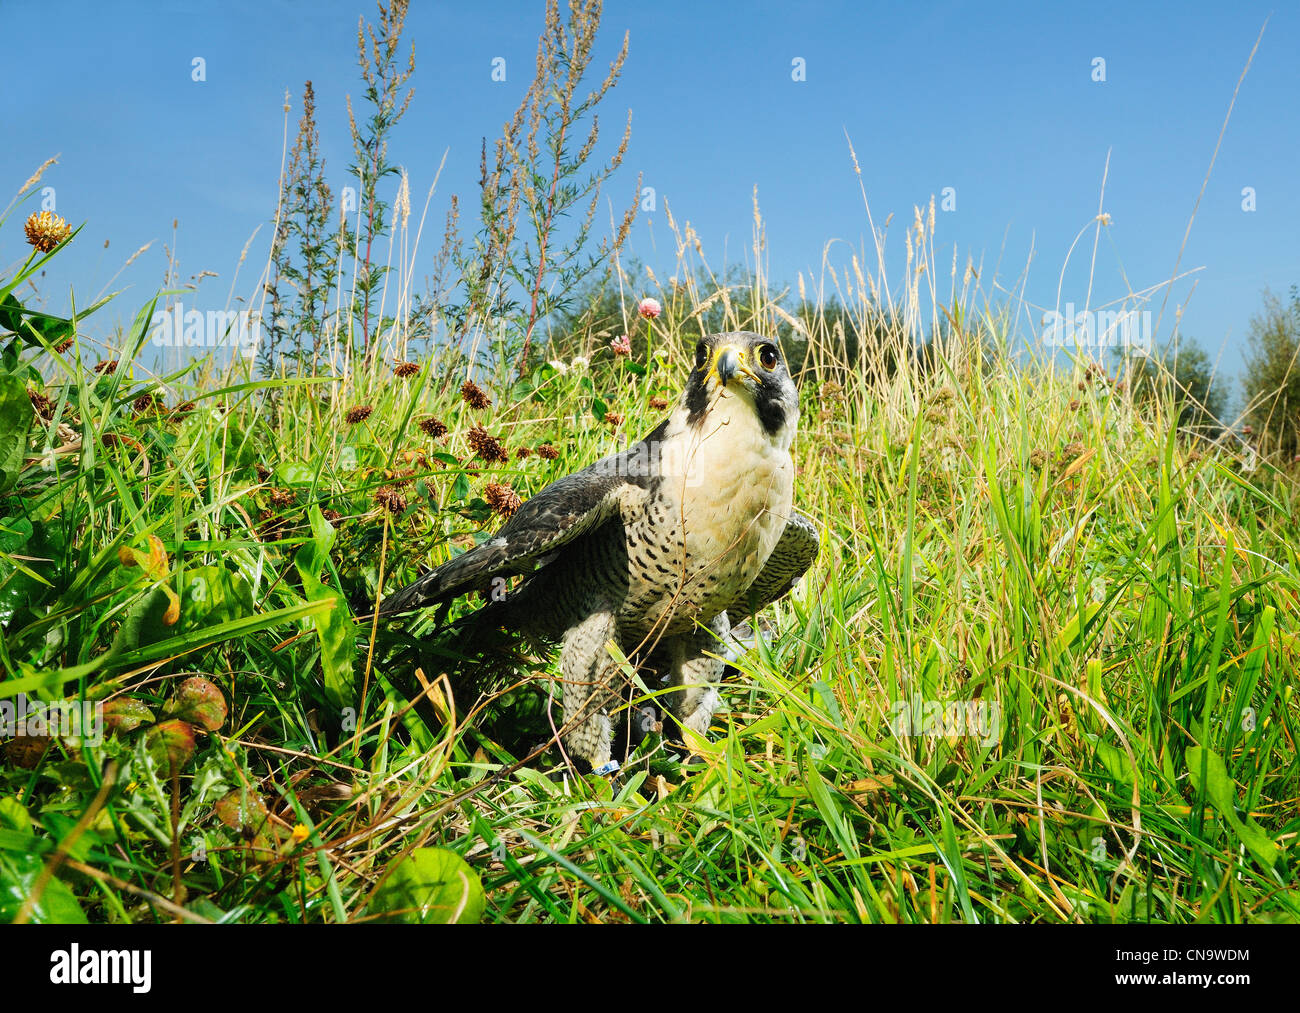 Hawk standing in grassy field Stock Photo